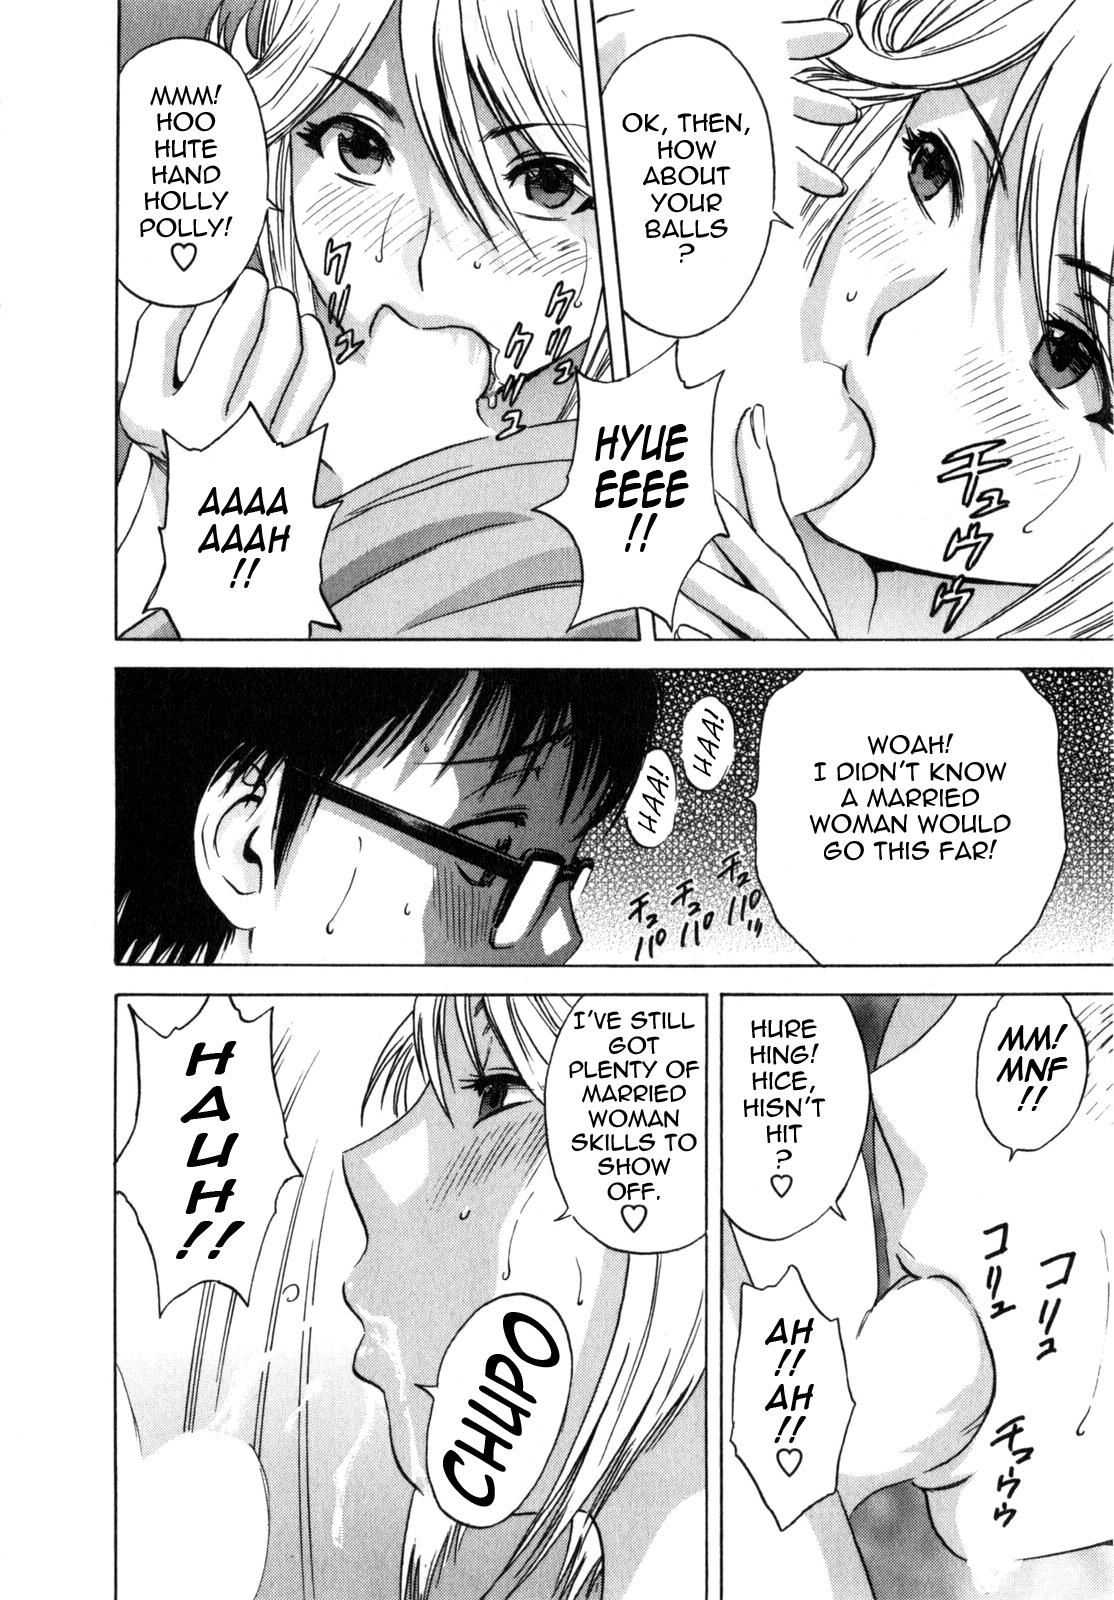 [Hidemaru] Life with Married Women Just Like a Manga 1 - Ch. 1-5 [English] {Tadanohito} 36